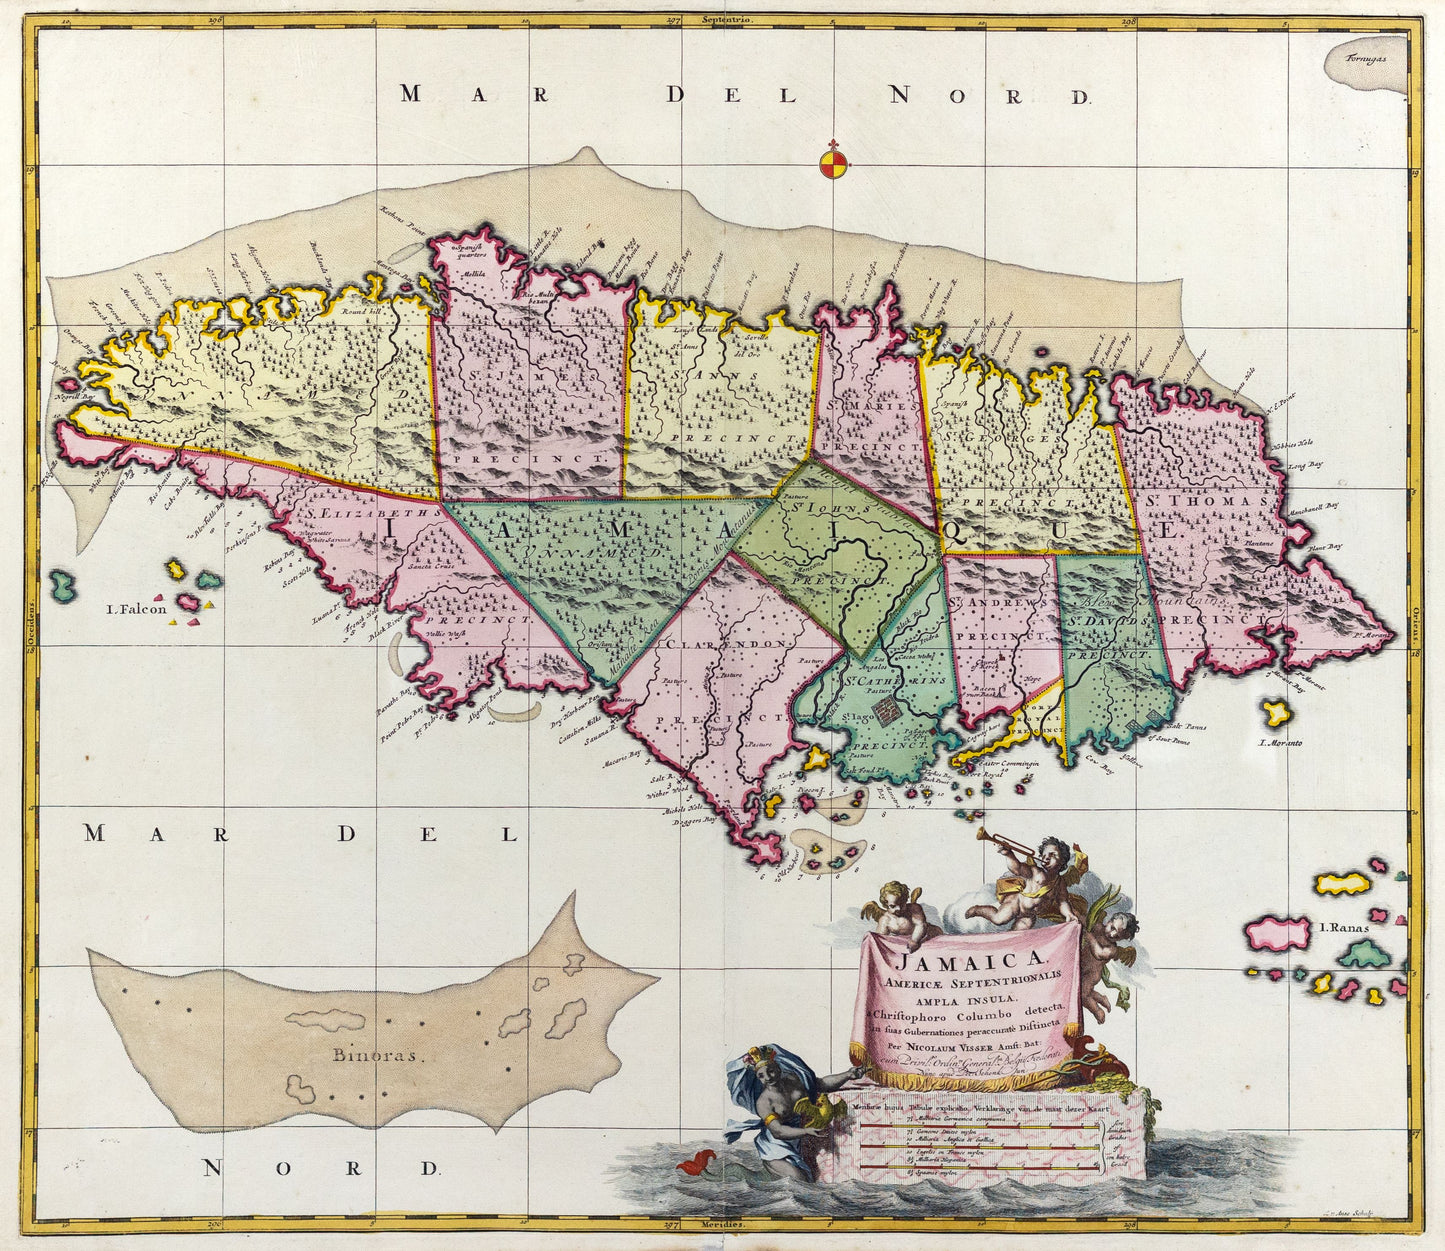 Nicolaes Visscher.  Jamaica Americae Septentrionalis ampla insula. Amsterdam, 1709.